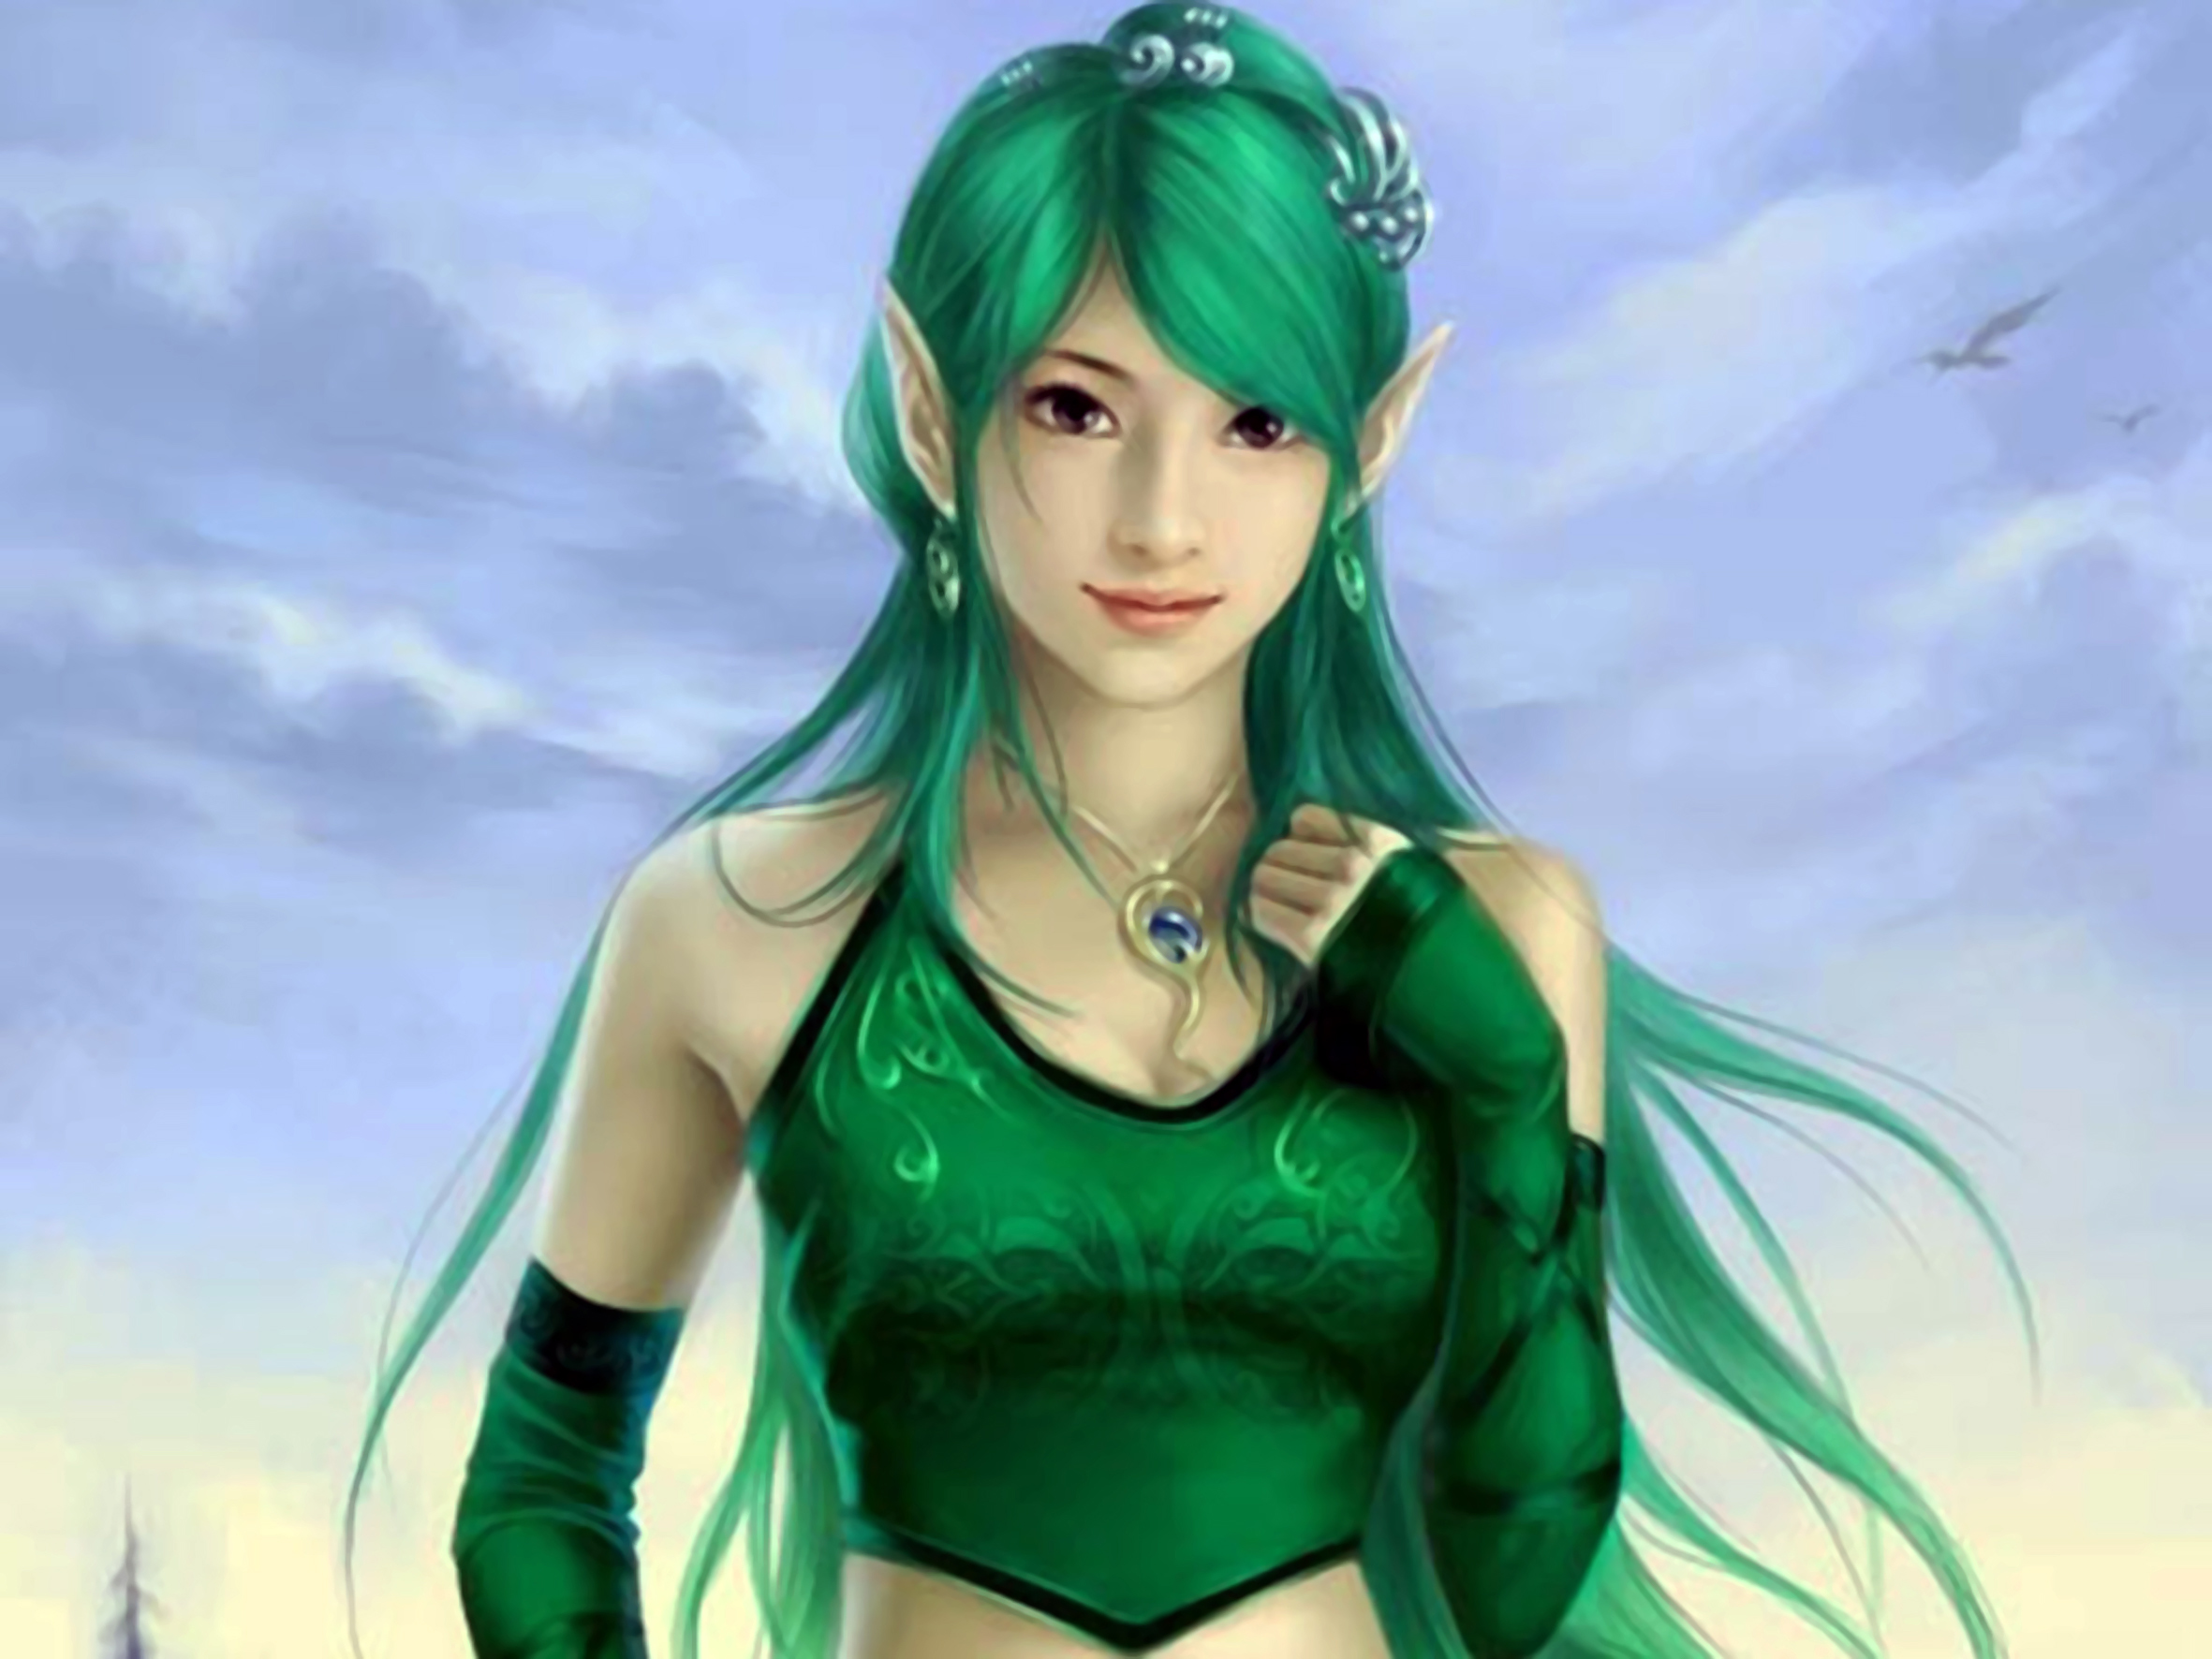 Is green and beautiful. Йоко Зеленоволосая. Эльфийка с зелеными волосами. Девочка с зелеными волосами. Красивая девушка с зелеными волосами.